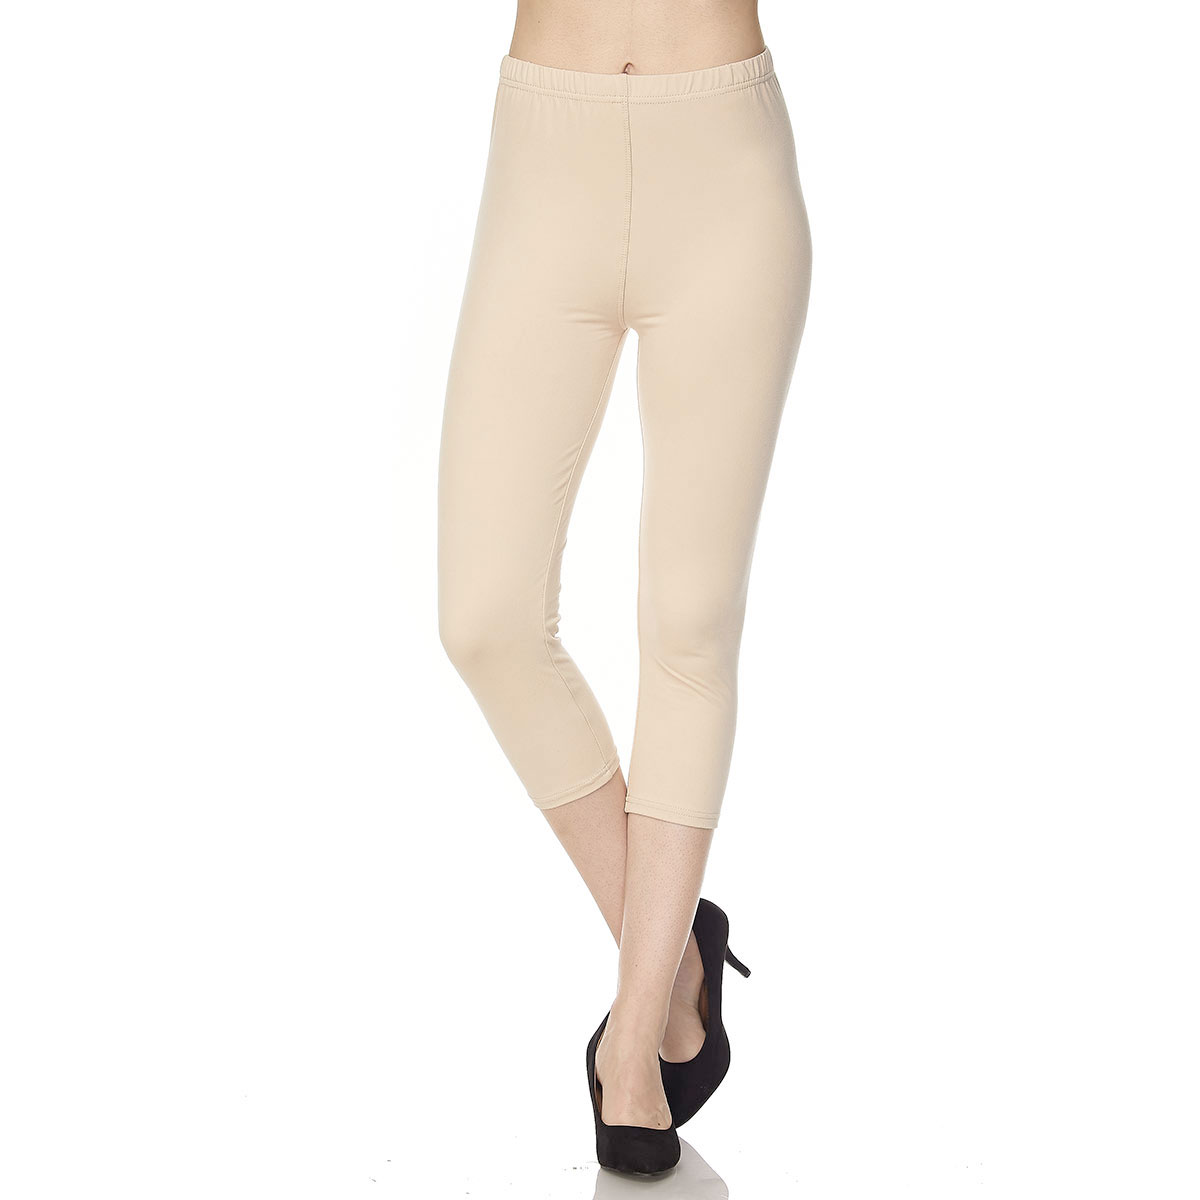 Buy online Off White Solid Full Length Leggings from Capris & Leggings for  Women by Valles365 By S.c. for ₹429 at 52% off